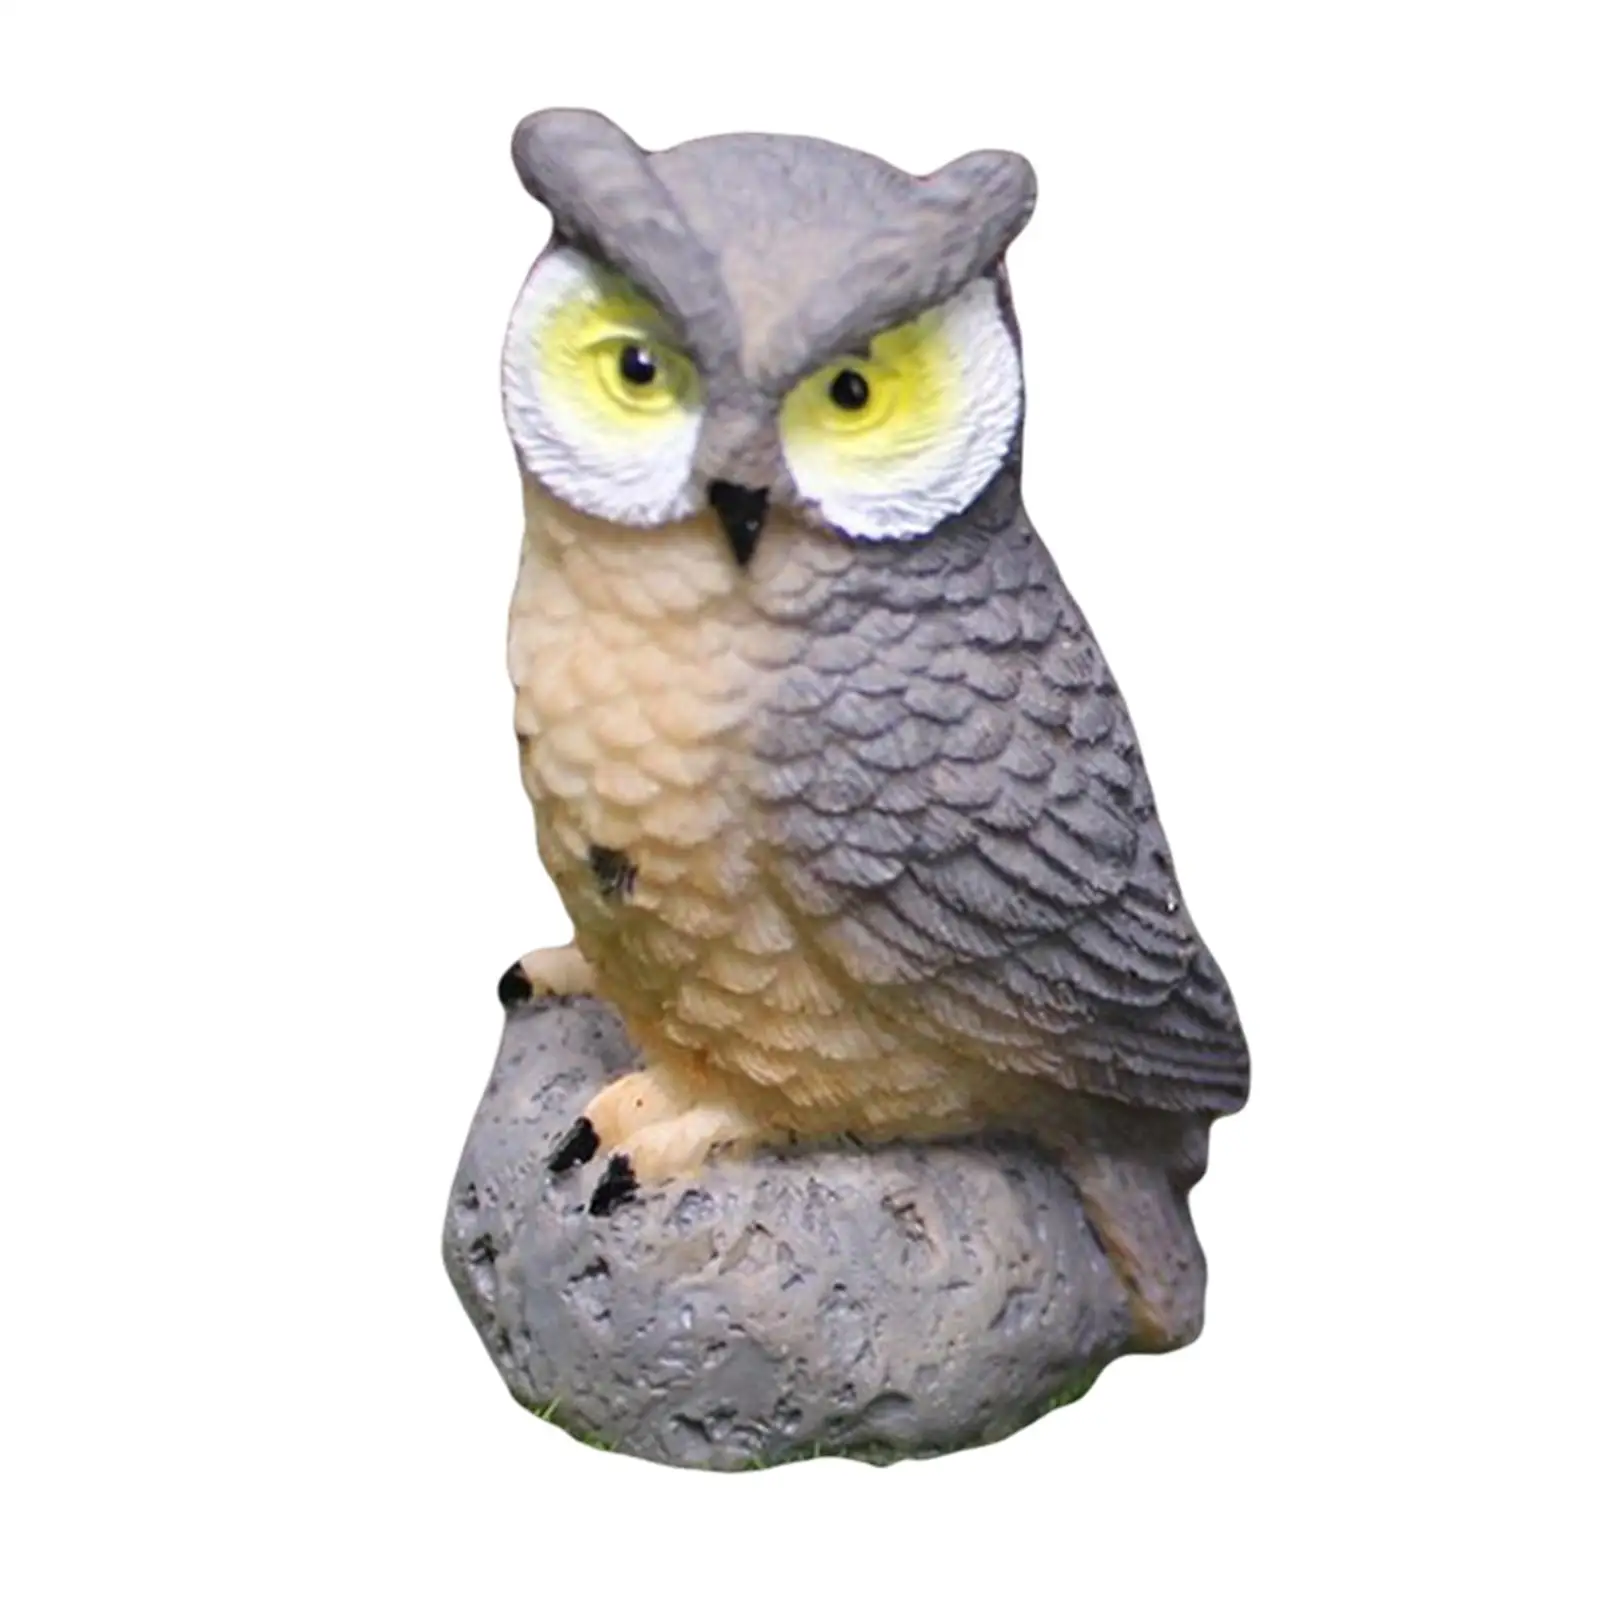 Mini Owl Figurines Fairy Garden Accessories Resin Miniature Birds for Bonsai Craft Decor Micro Landscape Plant Pot Dollhouse